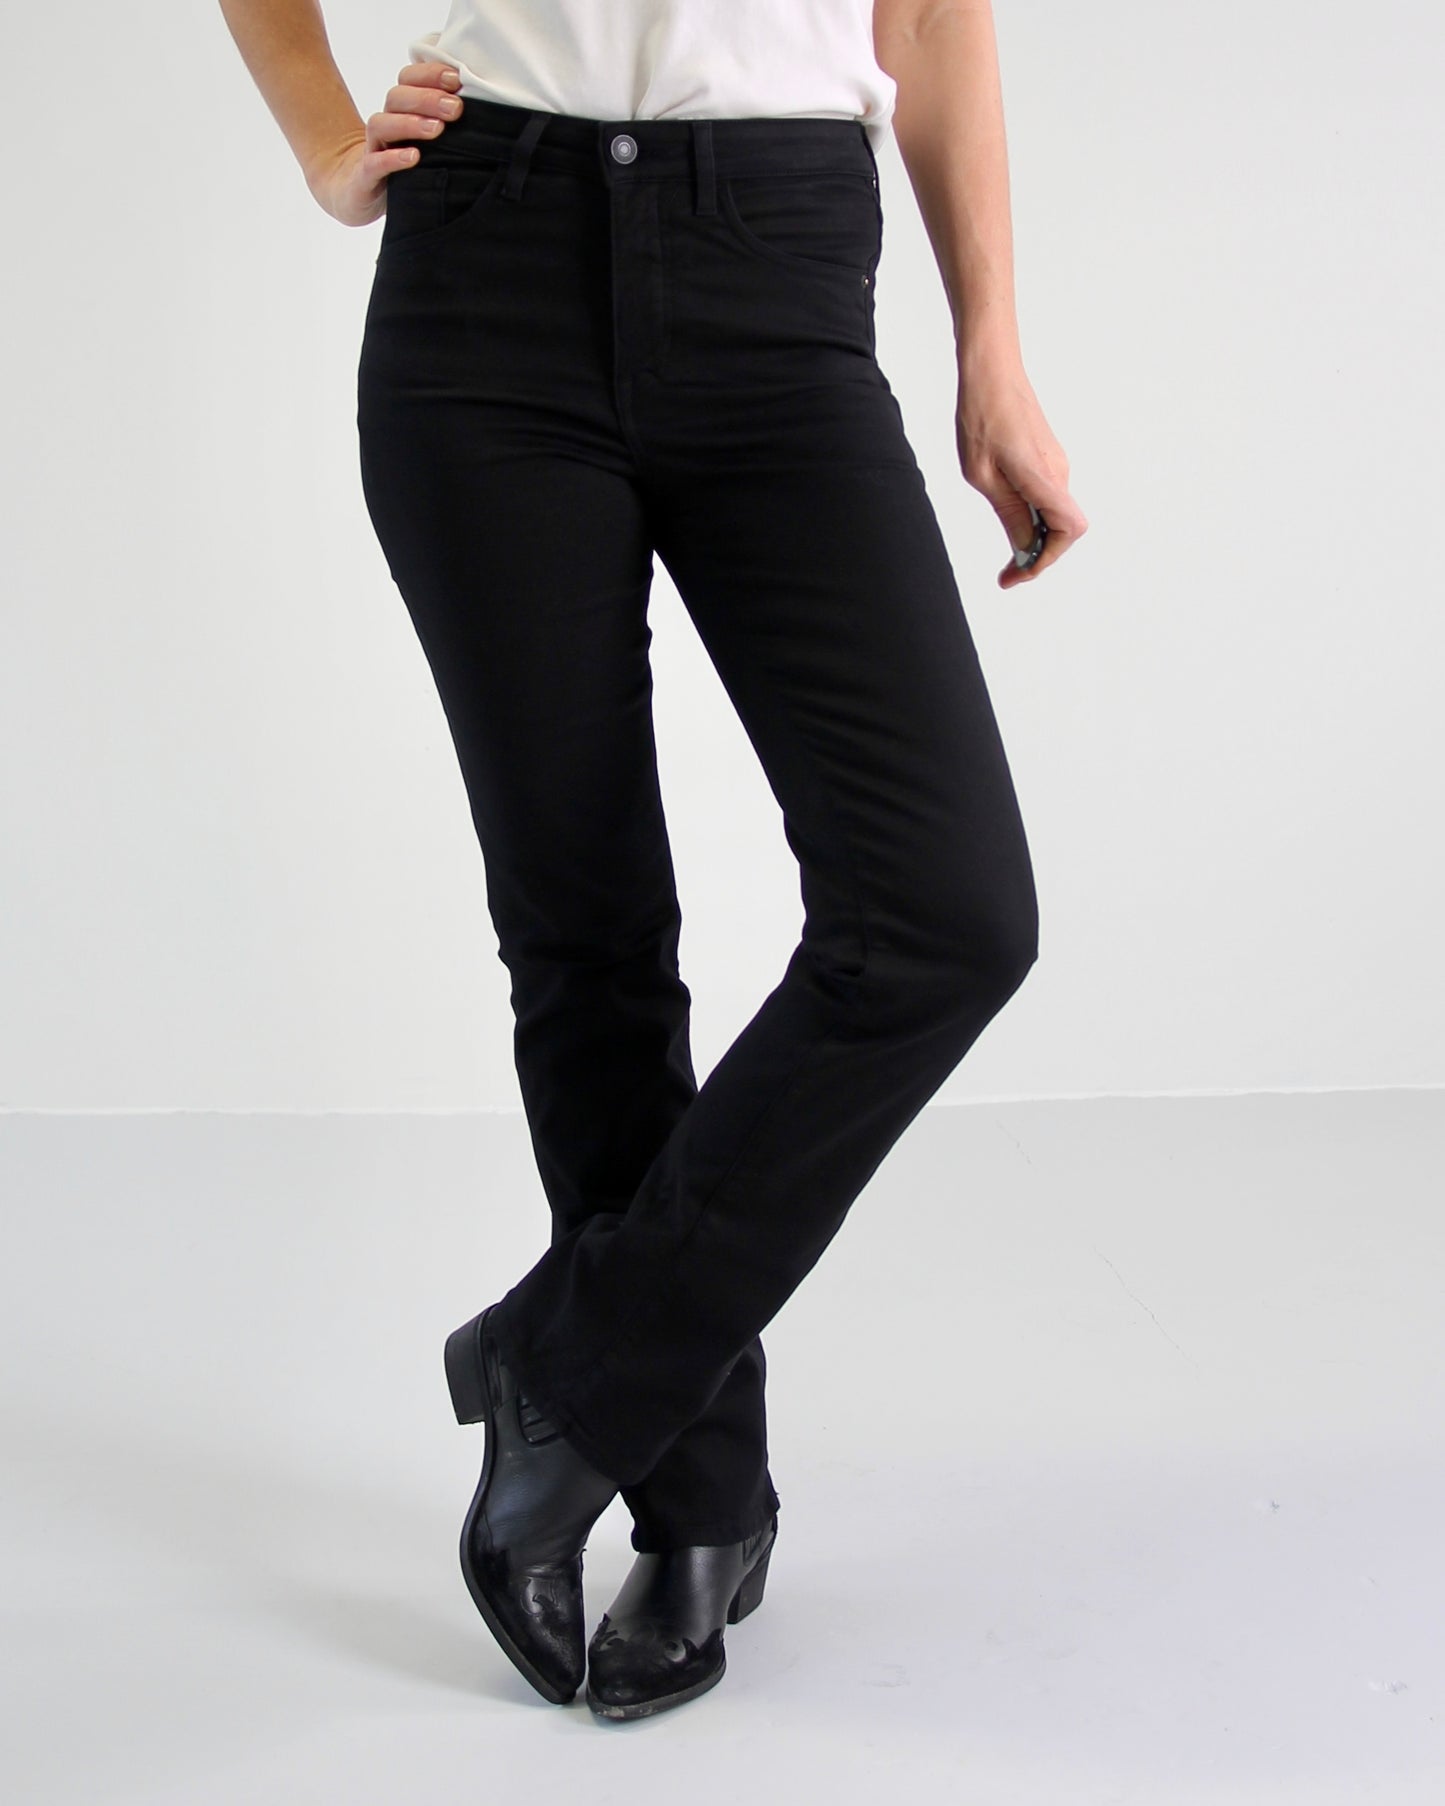 Vally Black Jeans - Dame - Straight  - High waist - Stretchy